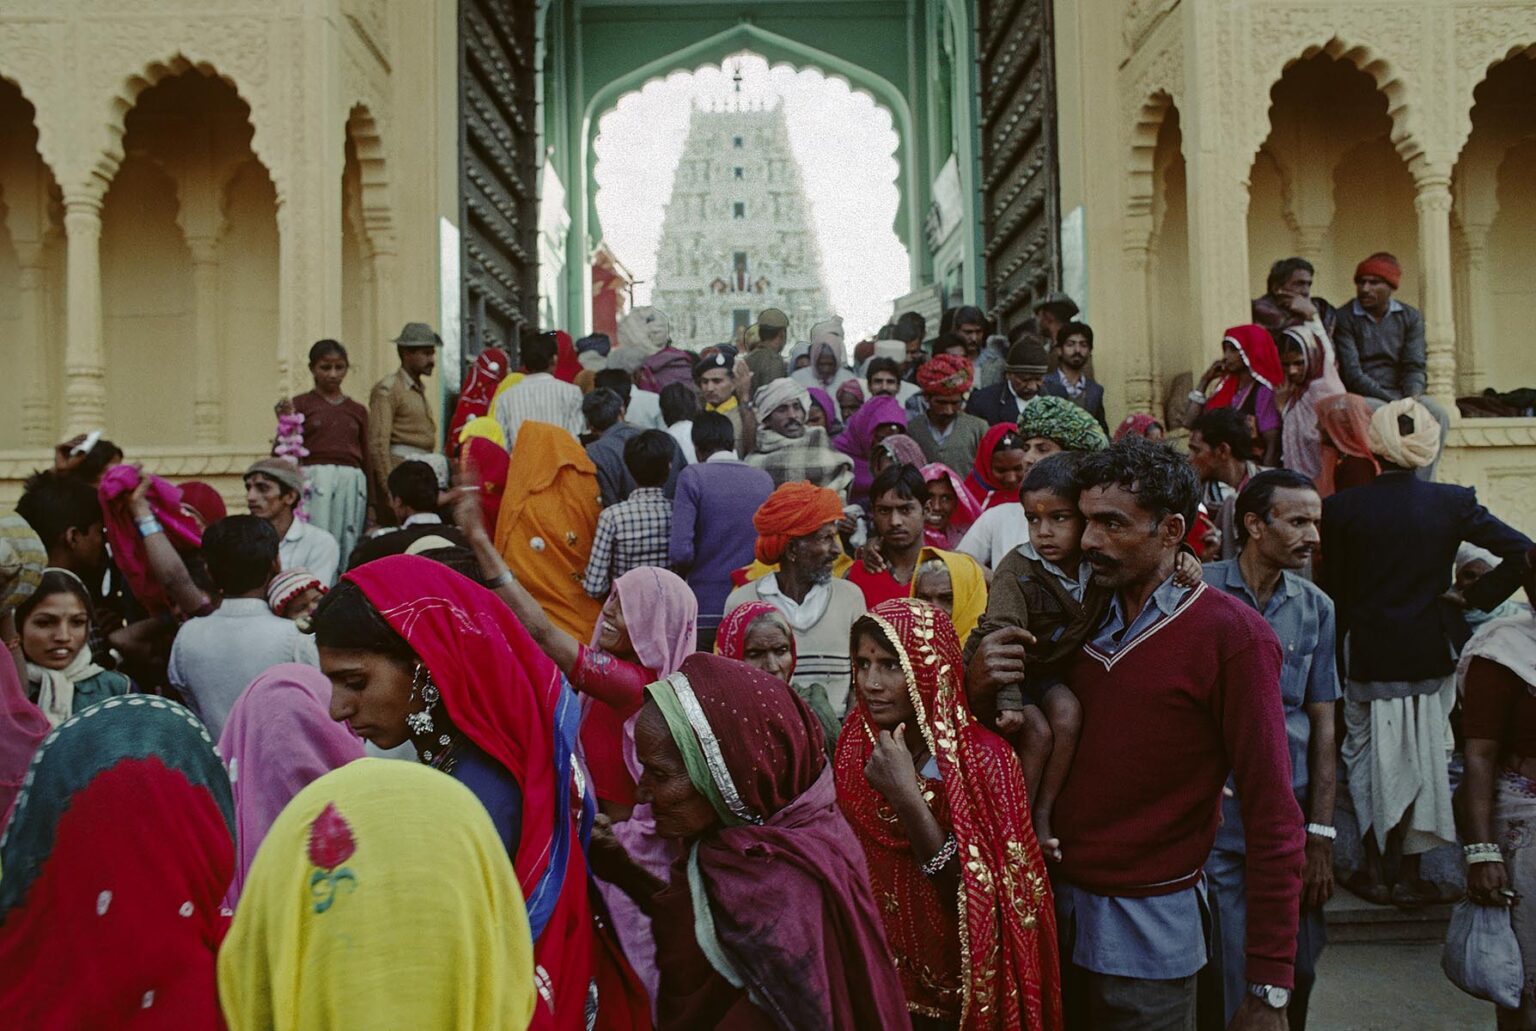 A crowd of RAJASTHANI PILGRIMS enters the RAMA BAIKUNTHA TEMPLE during the PUSHKAR CAMEL FAIR - RAJASTHAN, INDIA